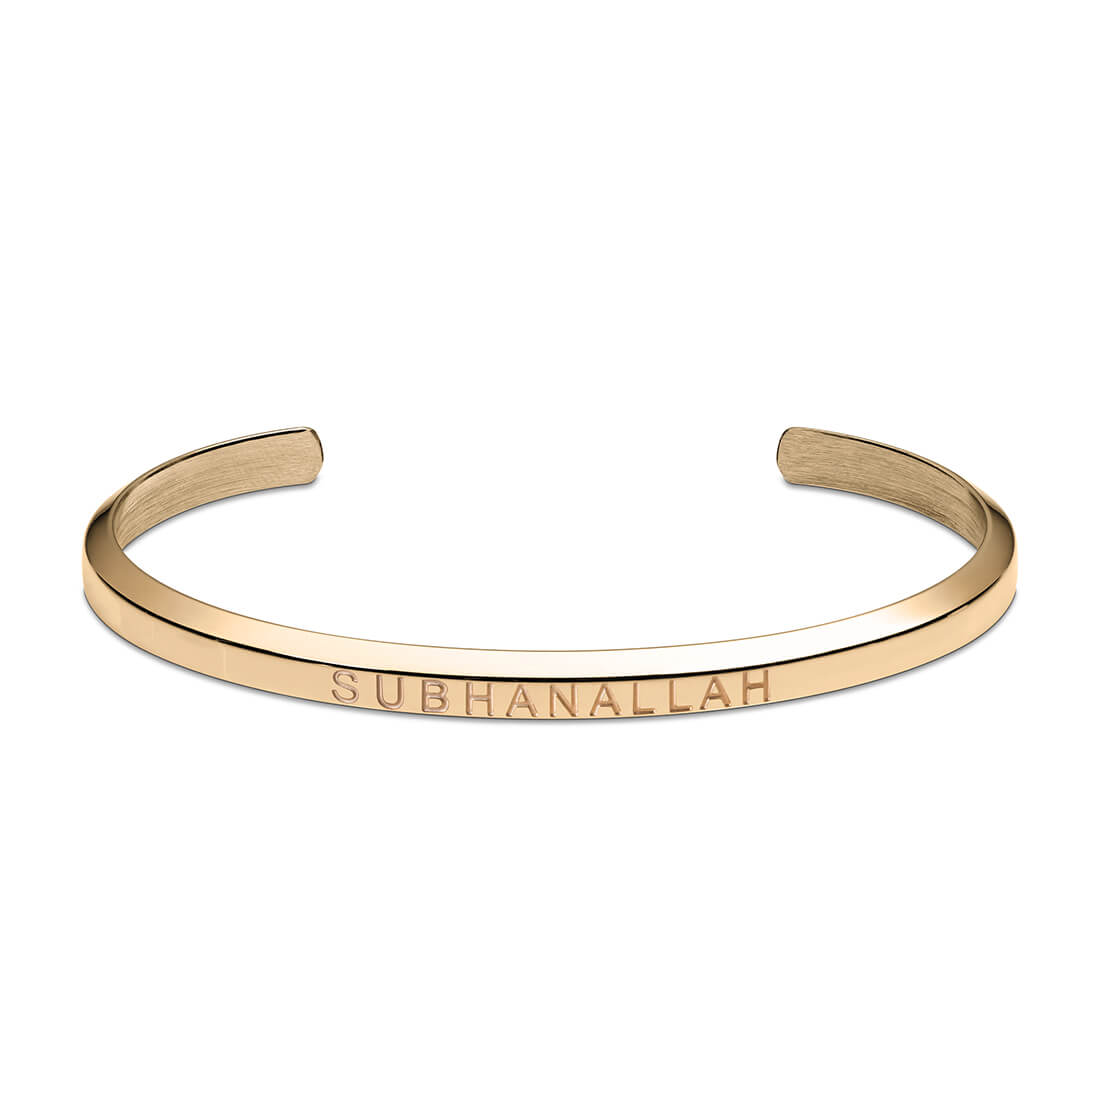 Subhanallah Cuff Bracelet | Islamic Jewelry | Crscnt Moon